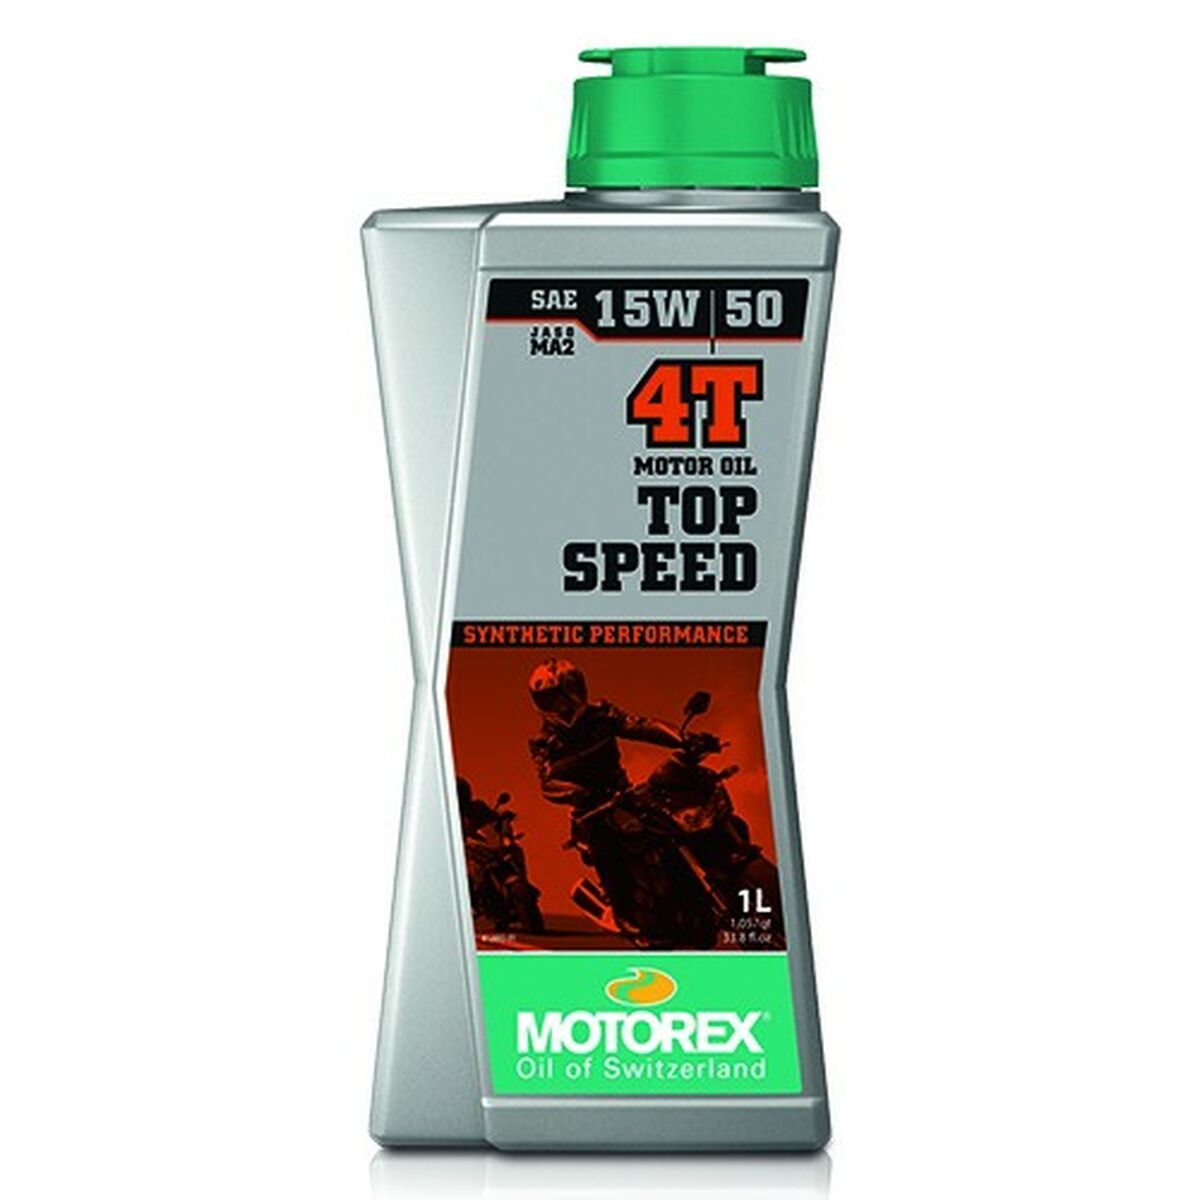 Motor Oil for Motorcycle Motorex Top Speed 1 L 15W50